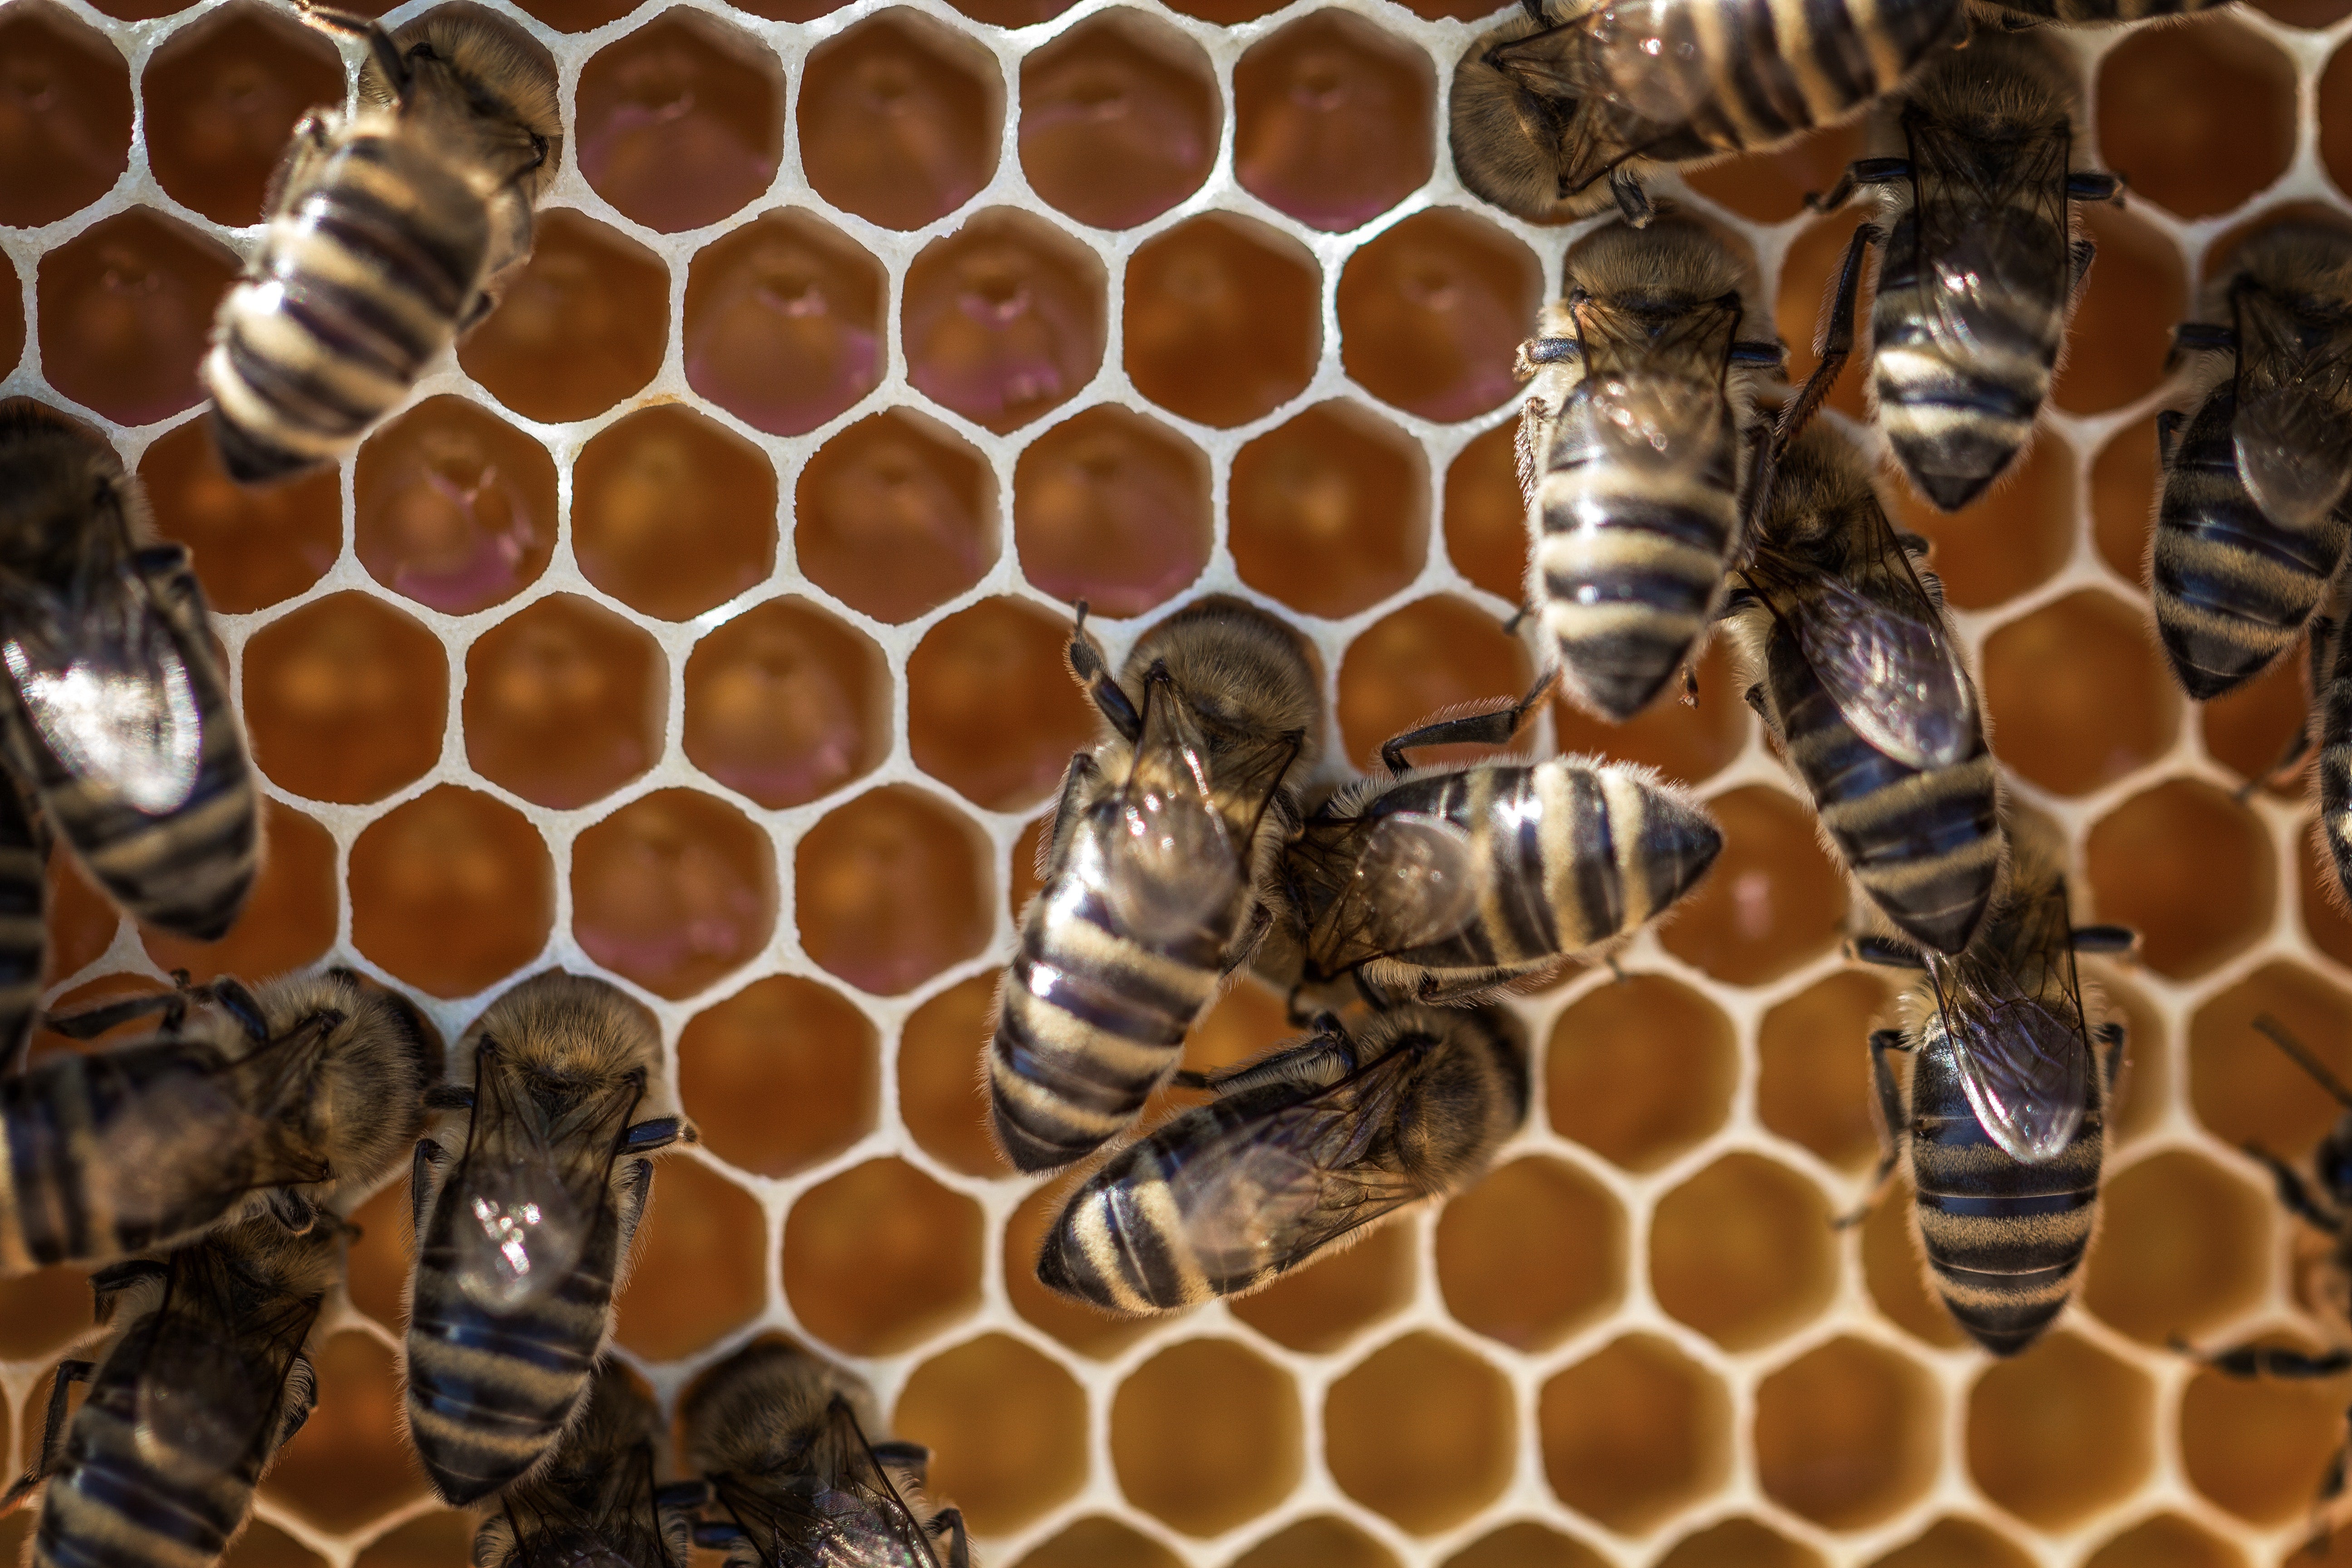 Hawaiian Honey Bees and what they make